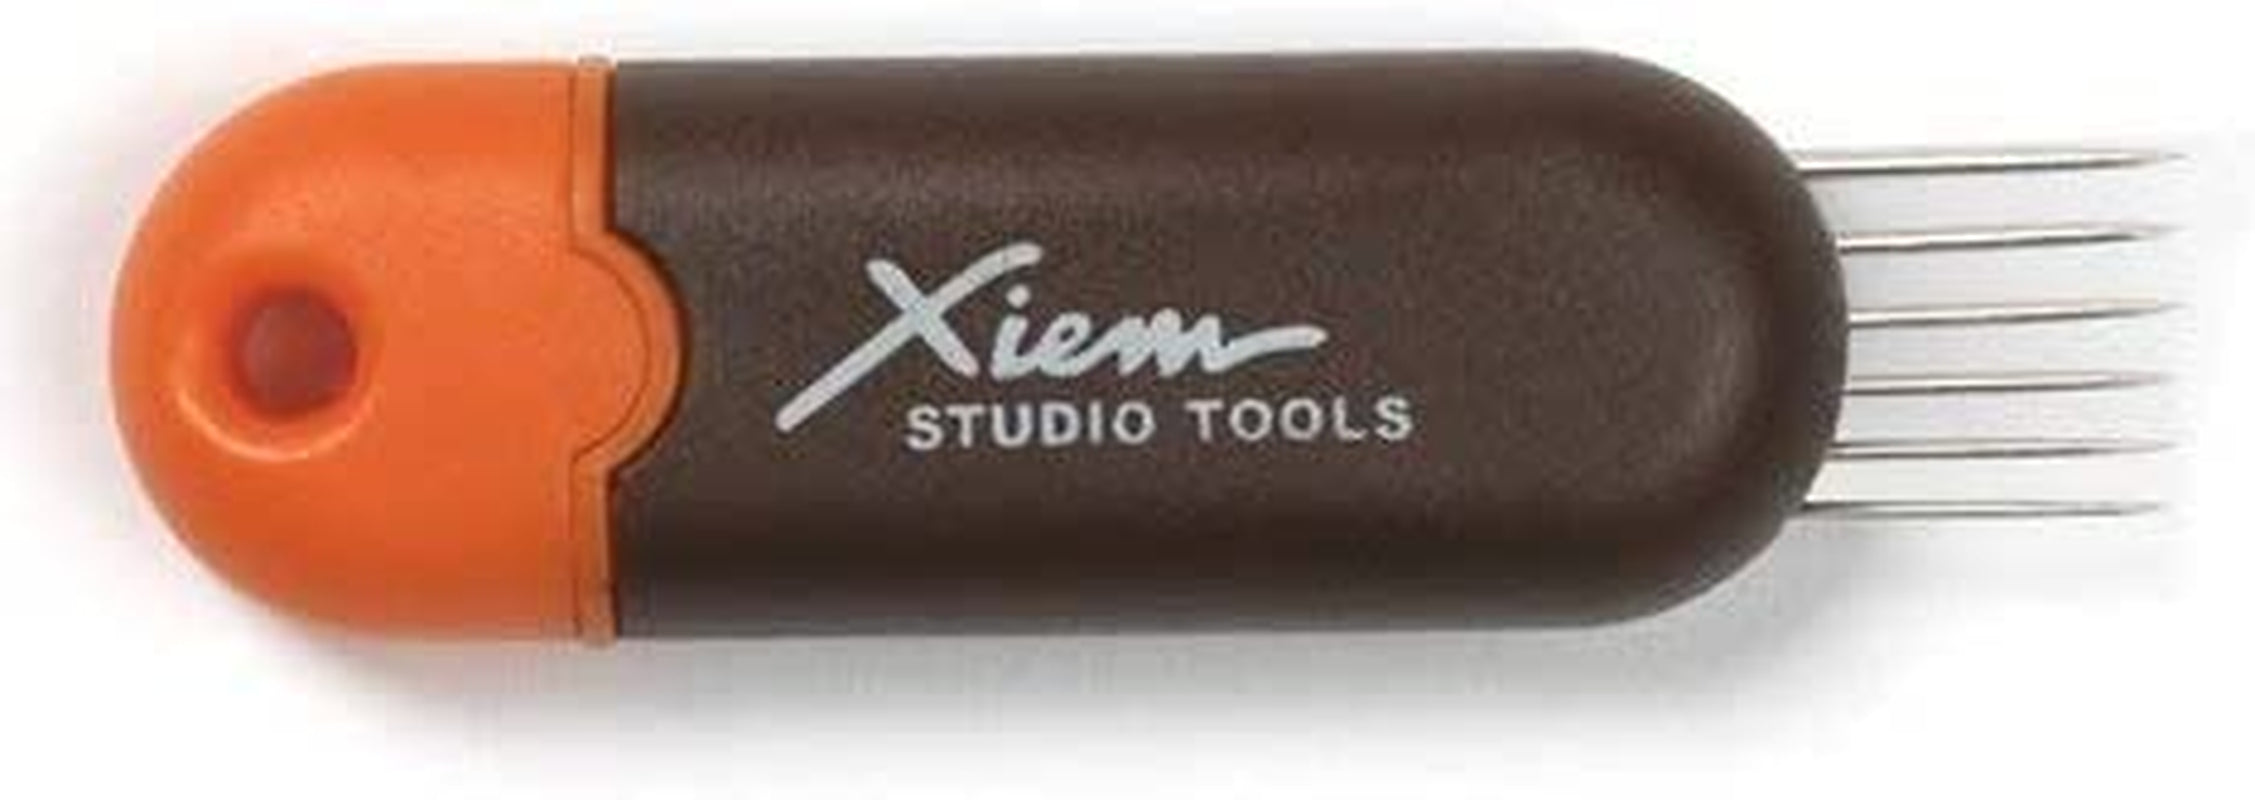 Xiem Studio Tools Ultimate Tools for Clay Artists (Trimming Tools)